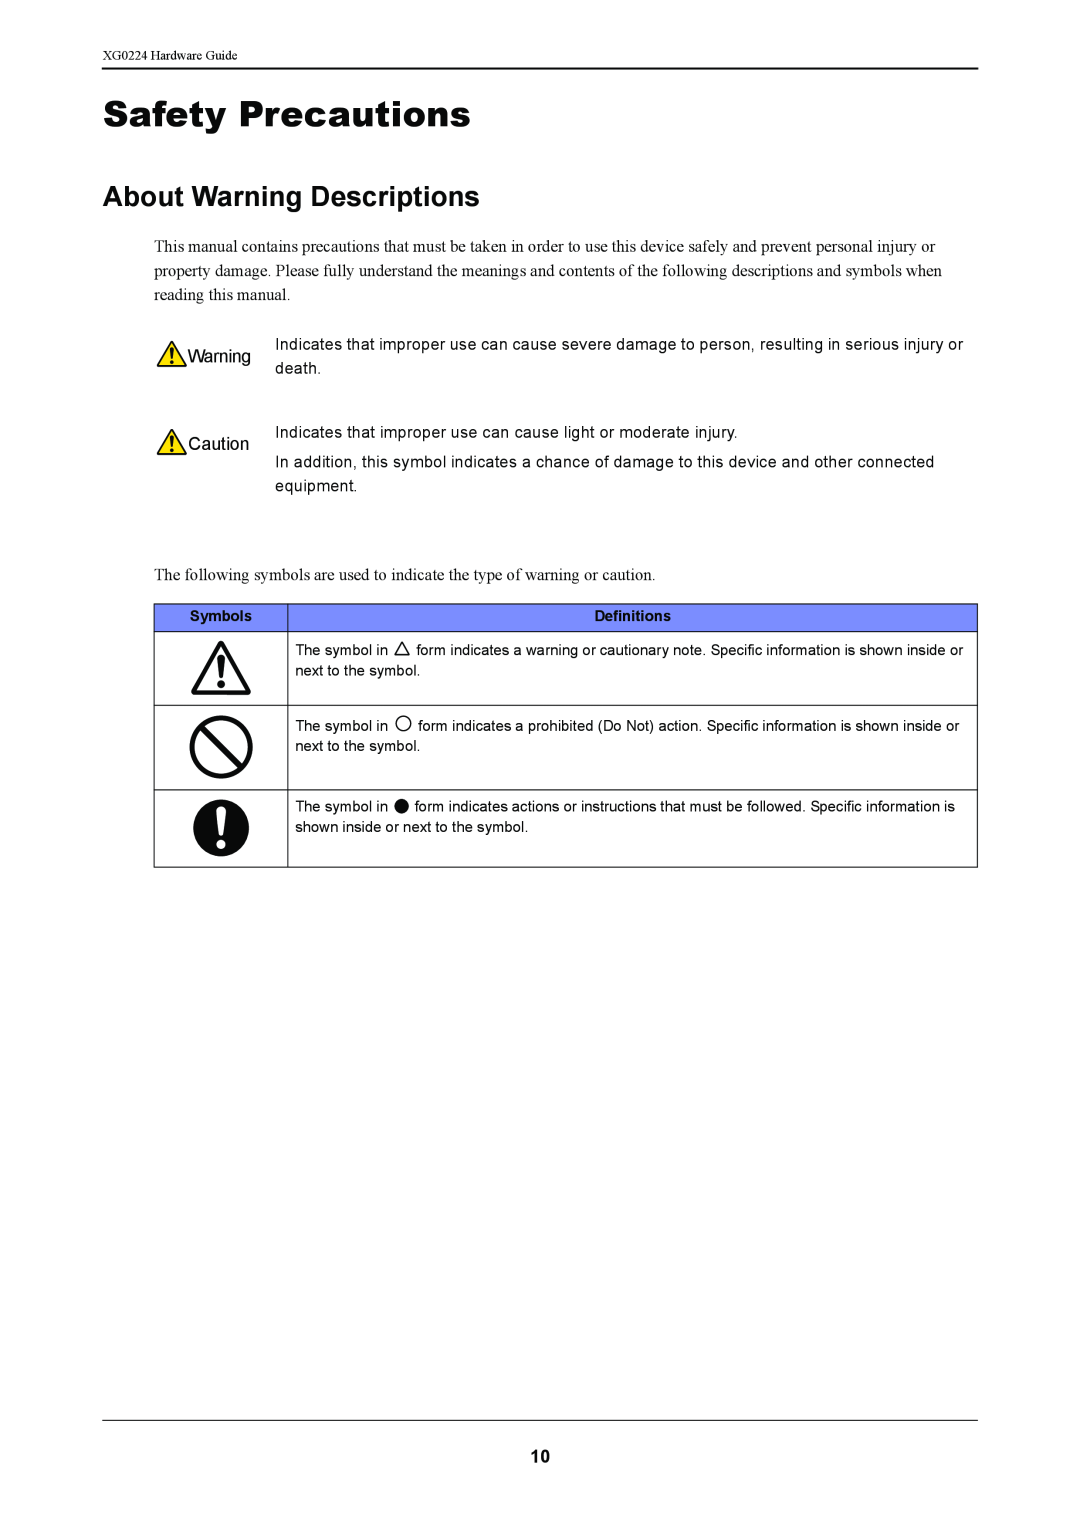 Fujitsu XG0224 manual Safety Precautions, About Warning Descriptions 